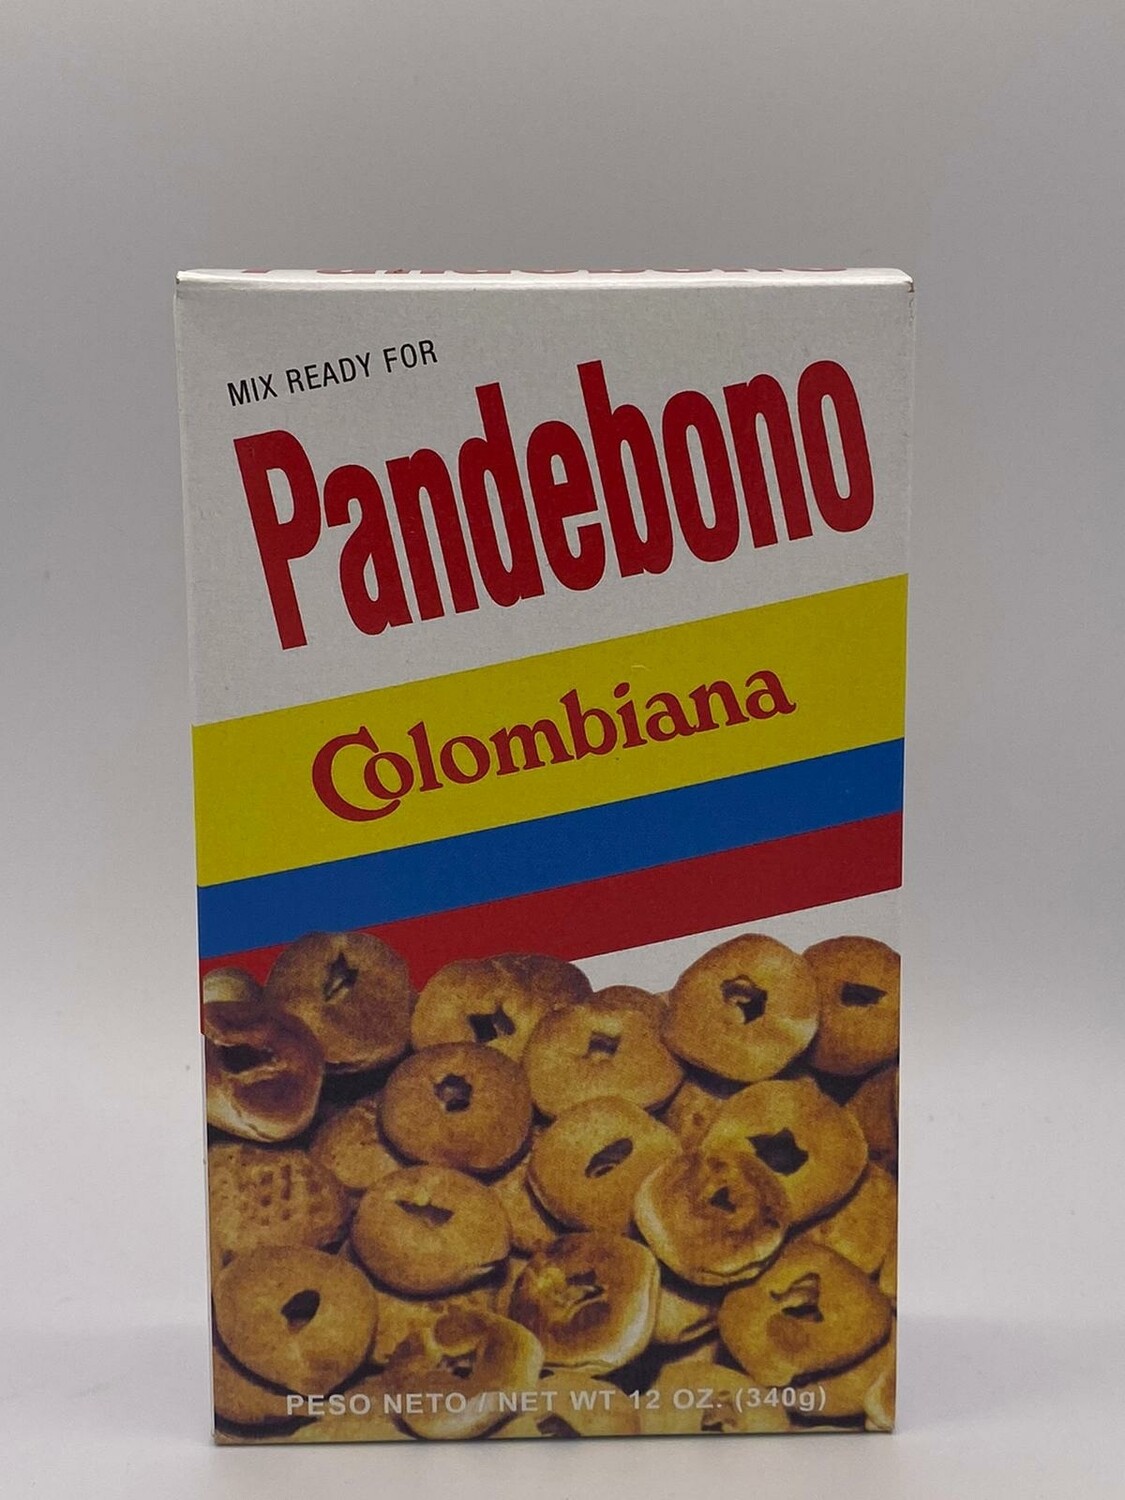 COLOMBIANA PANDEBONO 392G